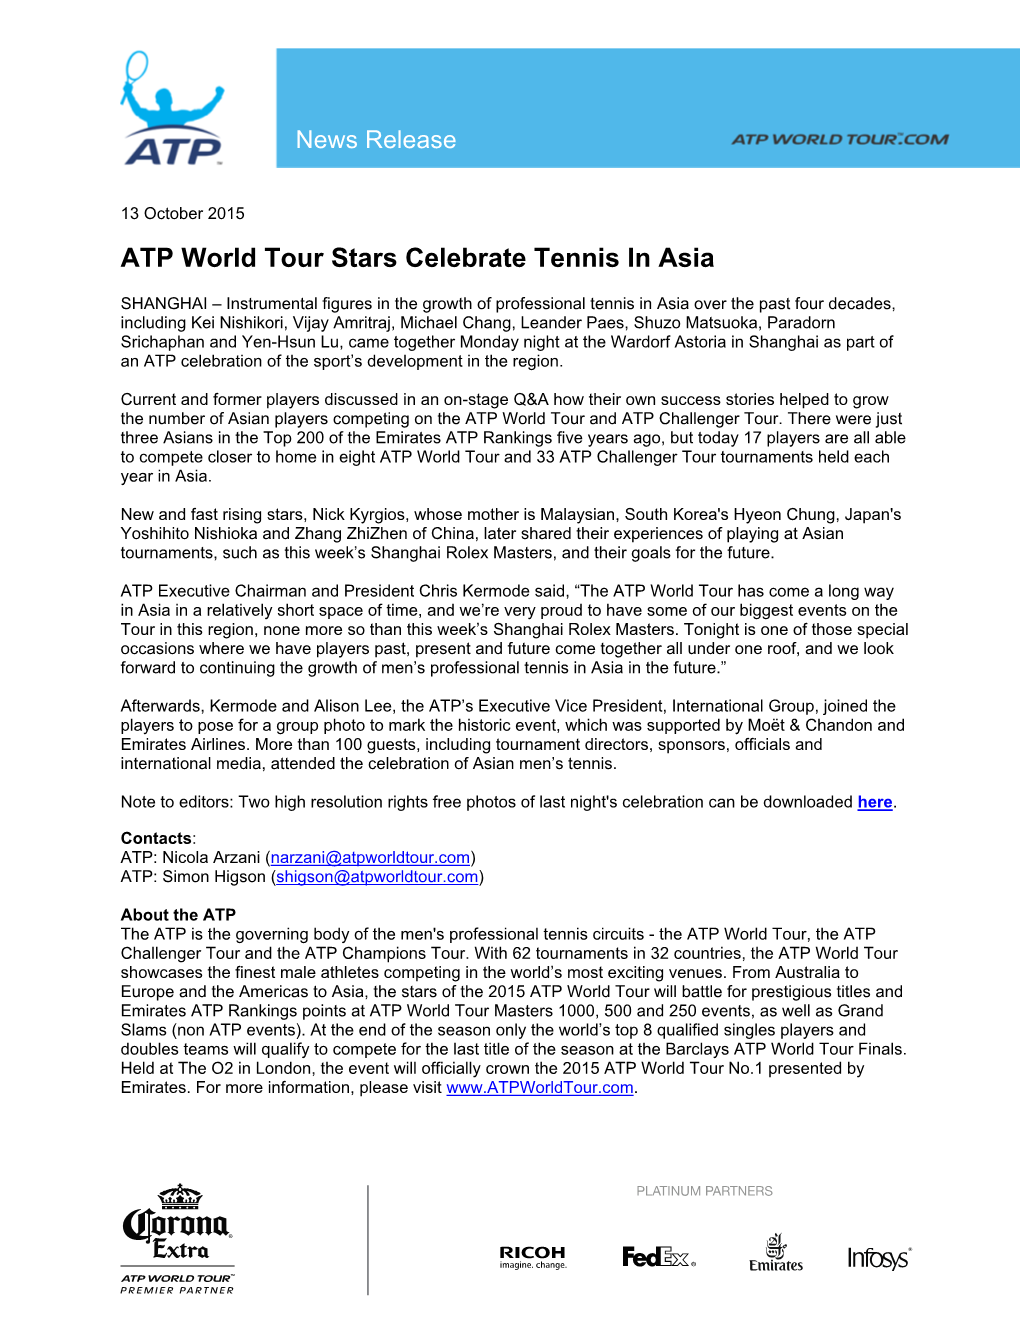 ATP World Tour Stars Celebrate Tennis in Asia